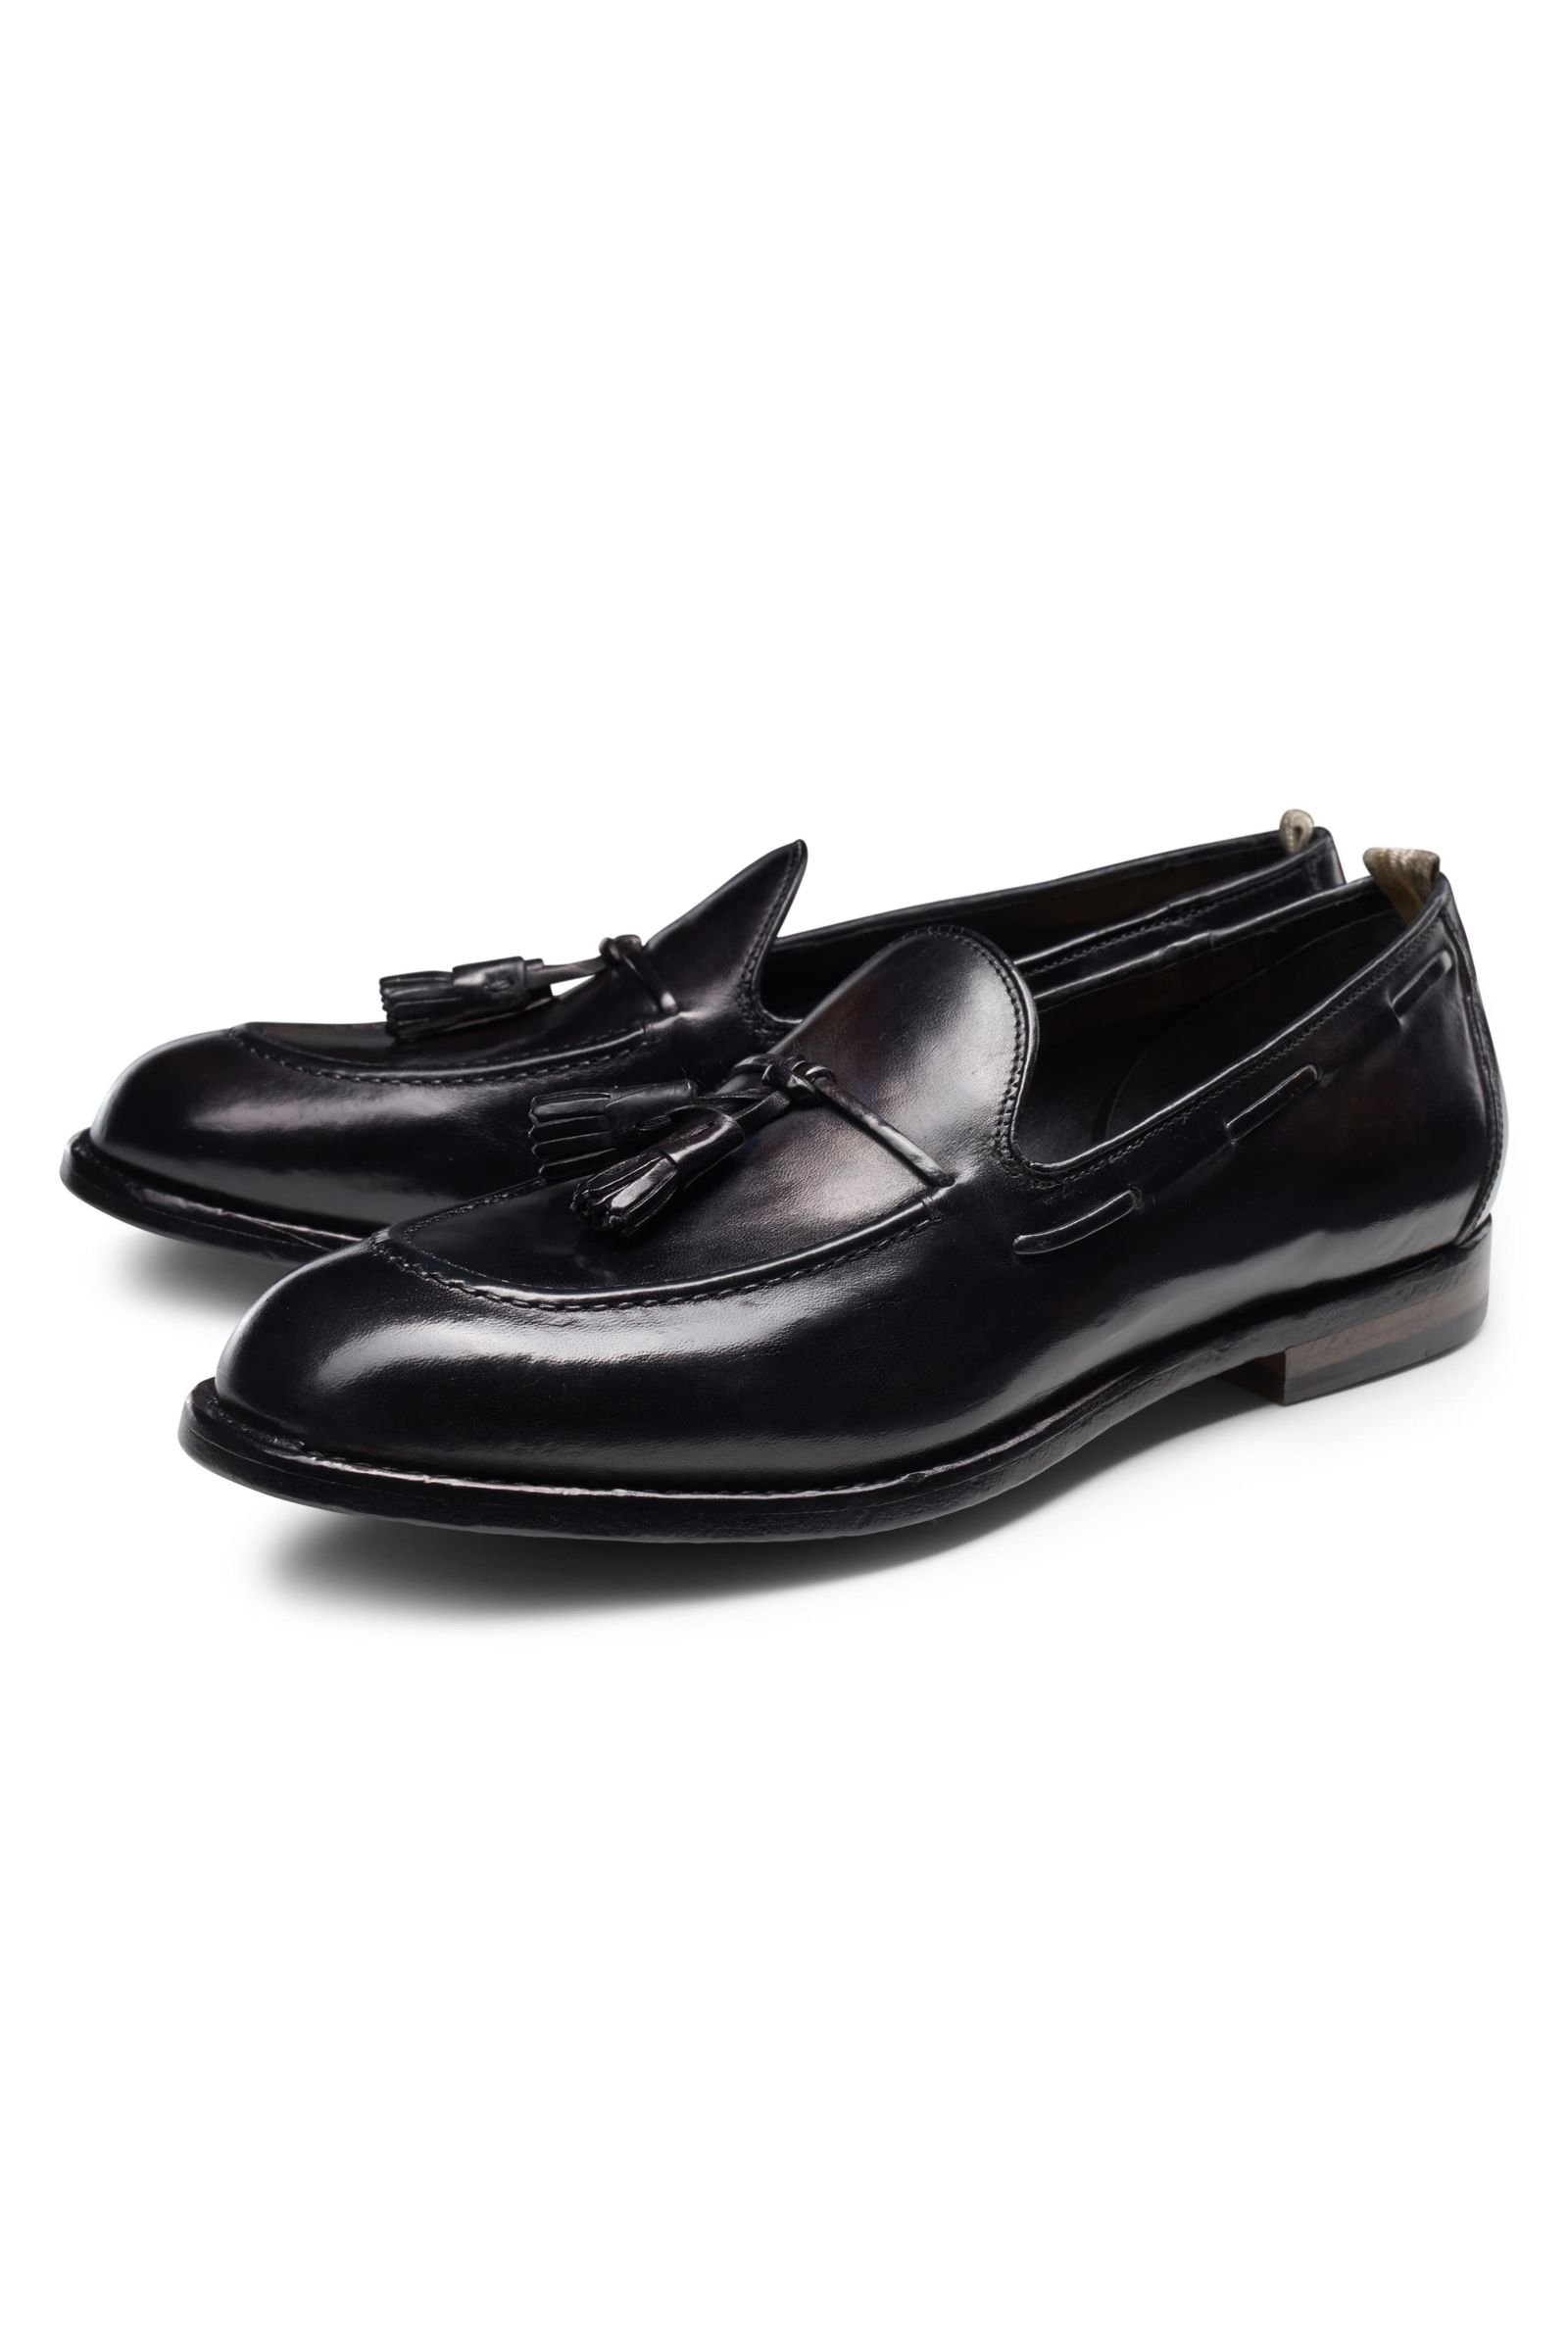 Tassel loafers 'Ivy 001' black